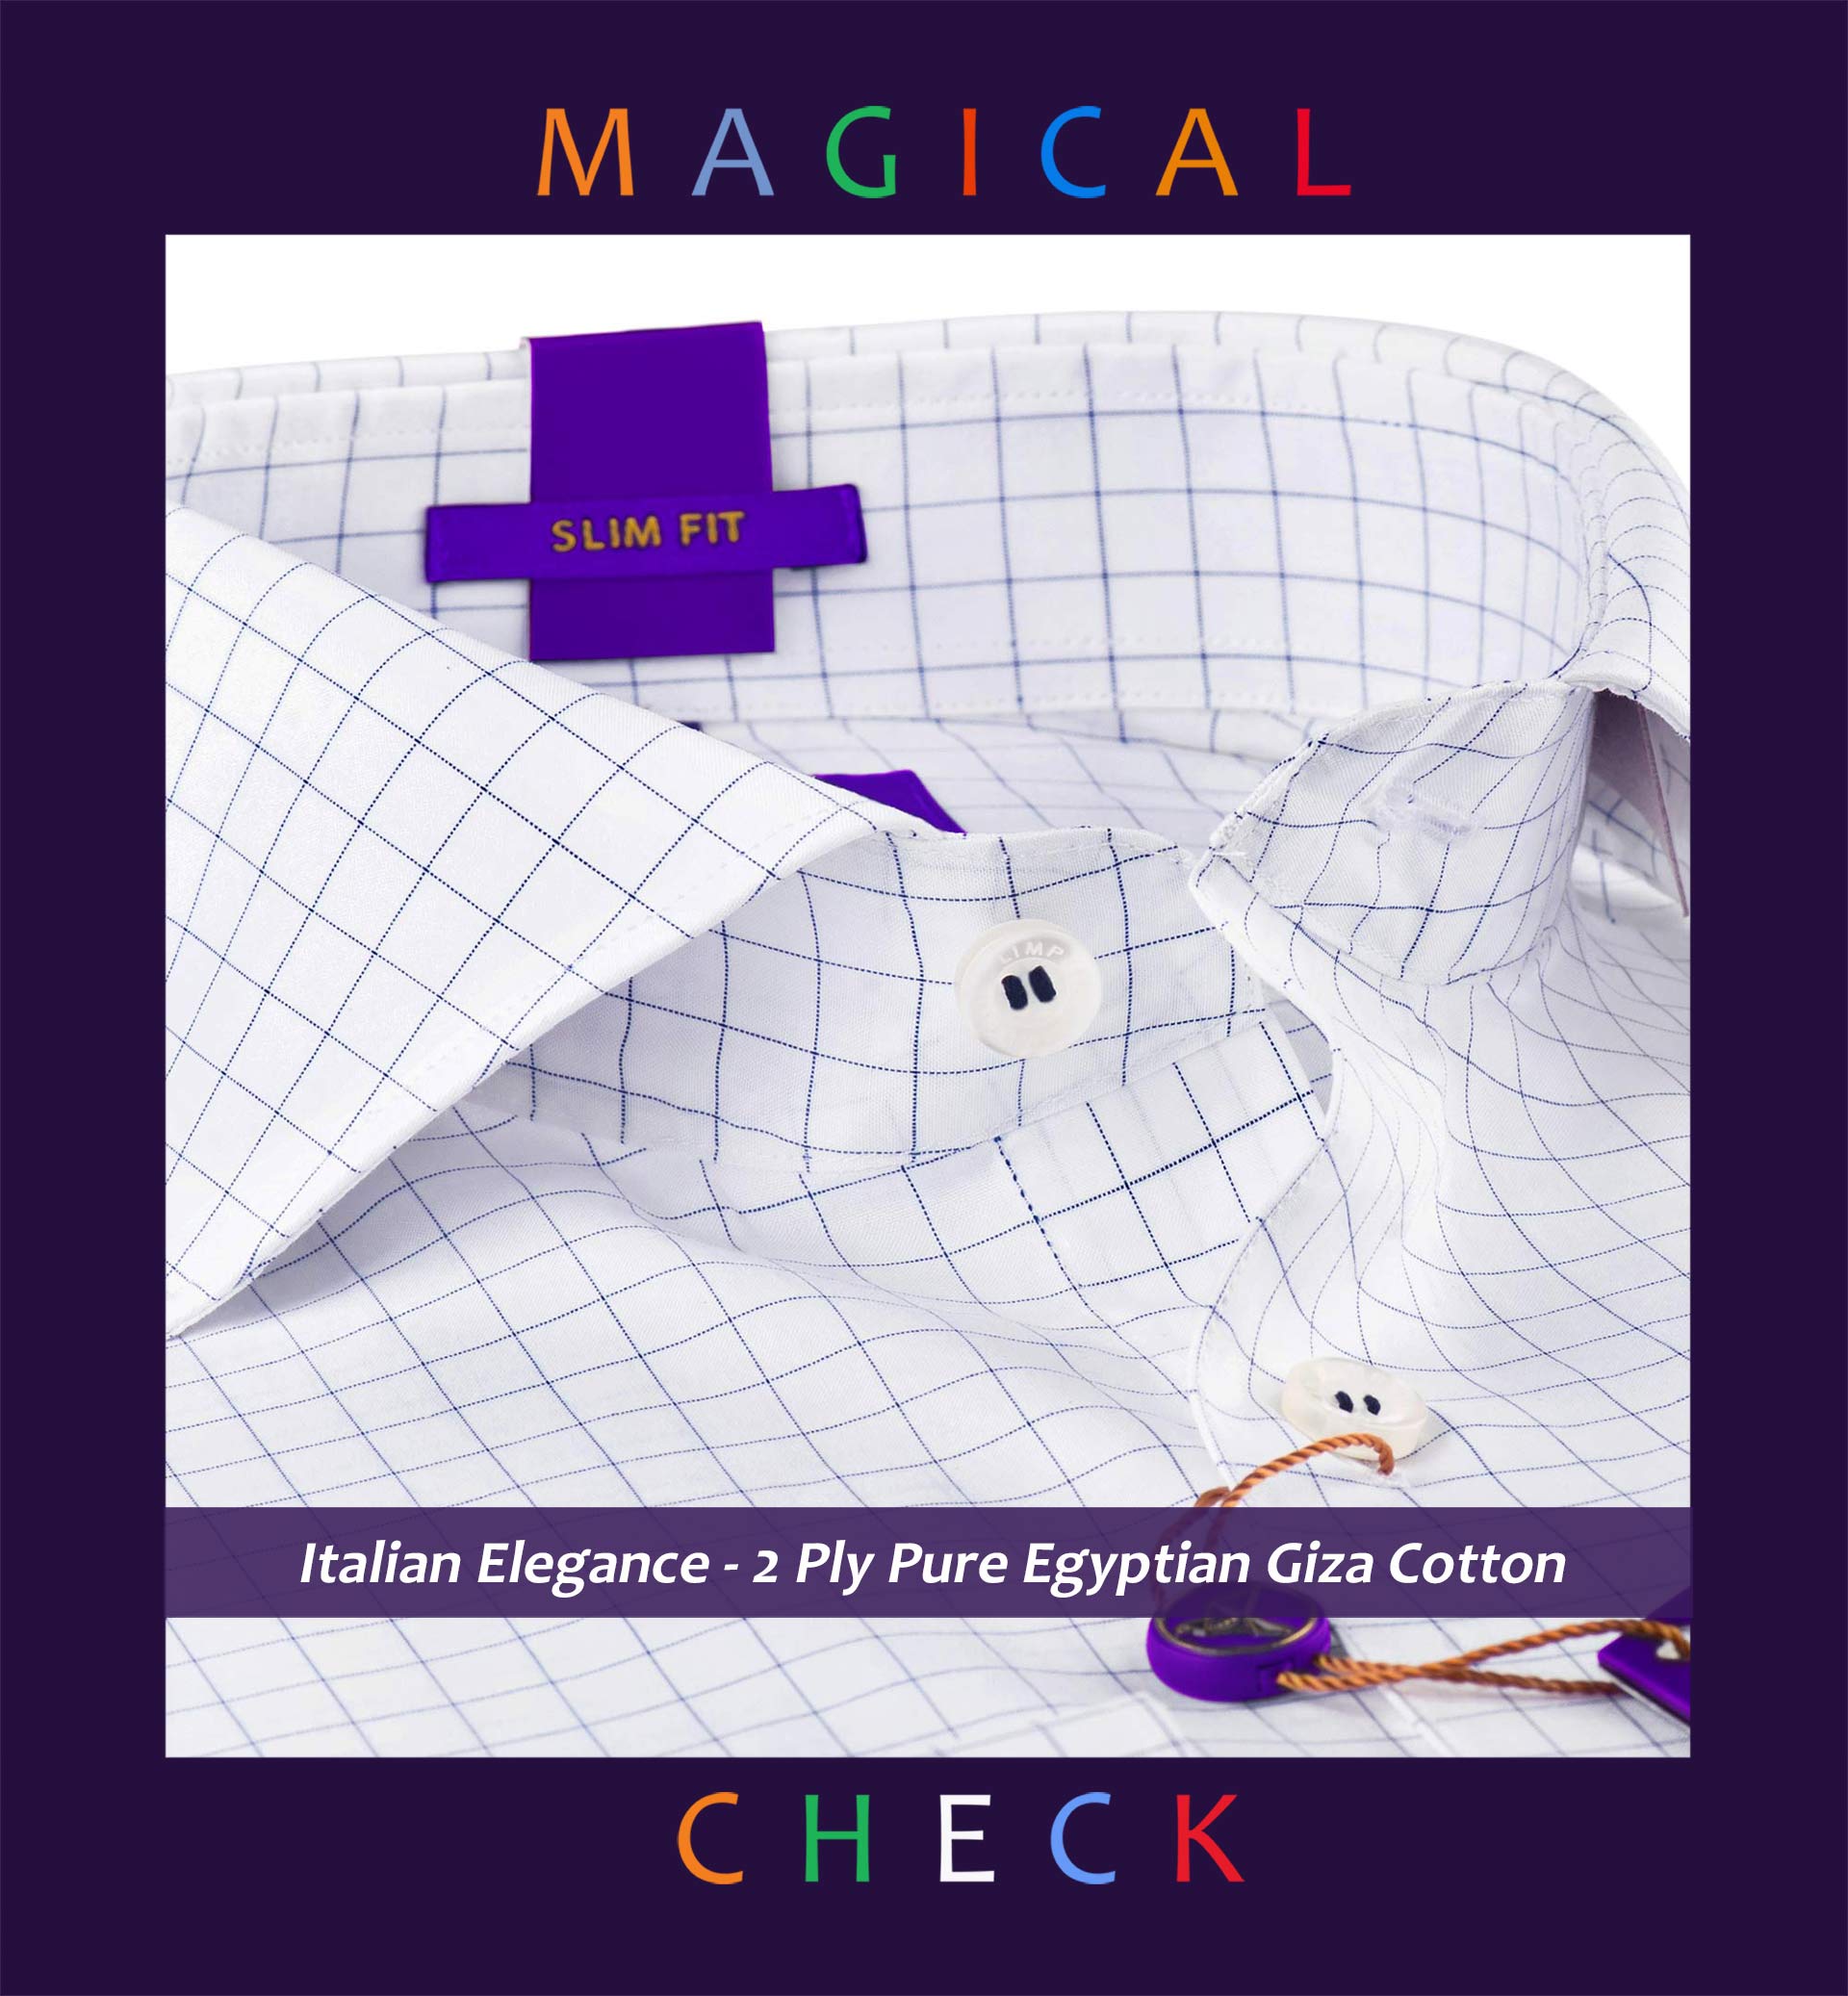 Huesca- Navy & White Magical Pin Check